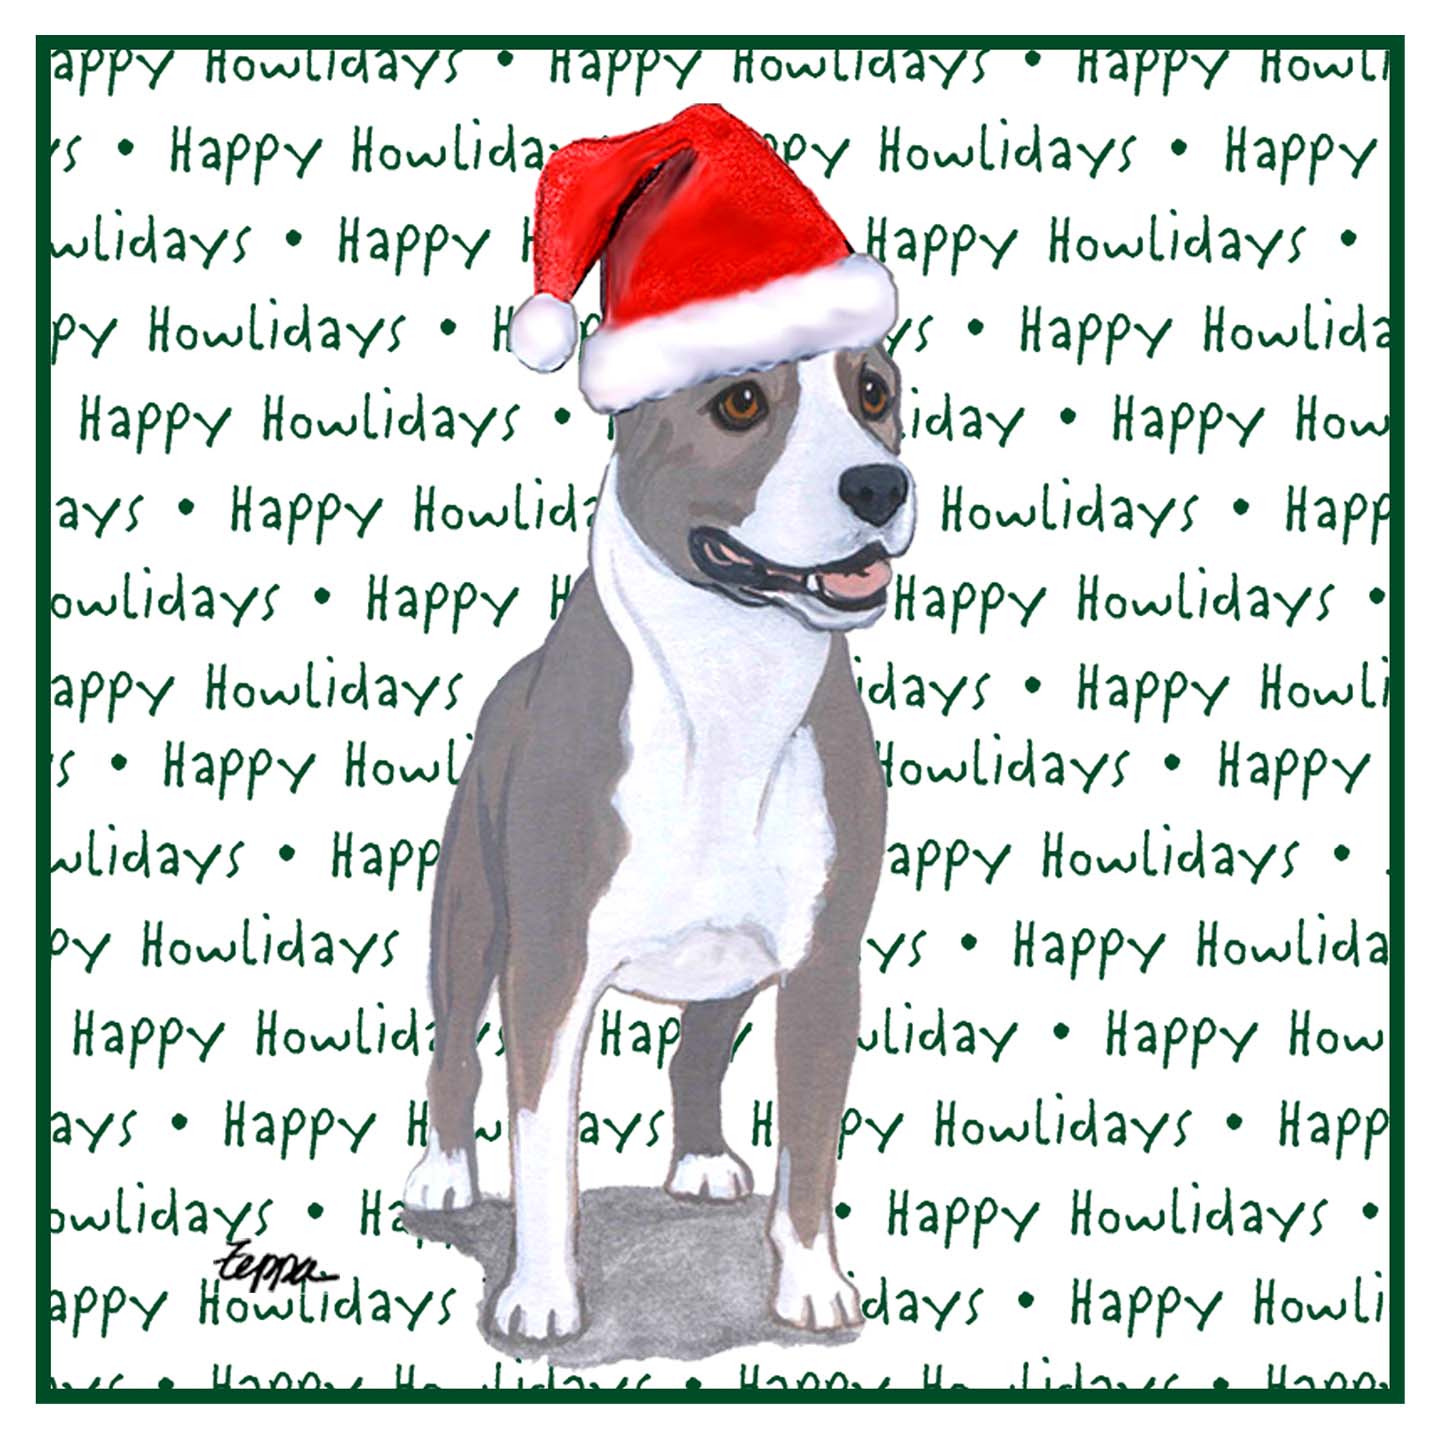 American Staffordshire Terrier Happy Howlidays Text - Adult Unisex Hoodie Sweatshirt